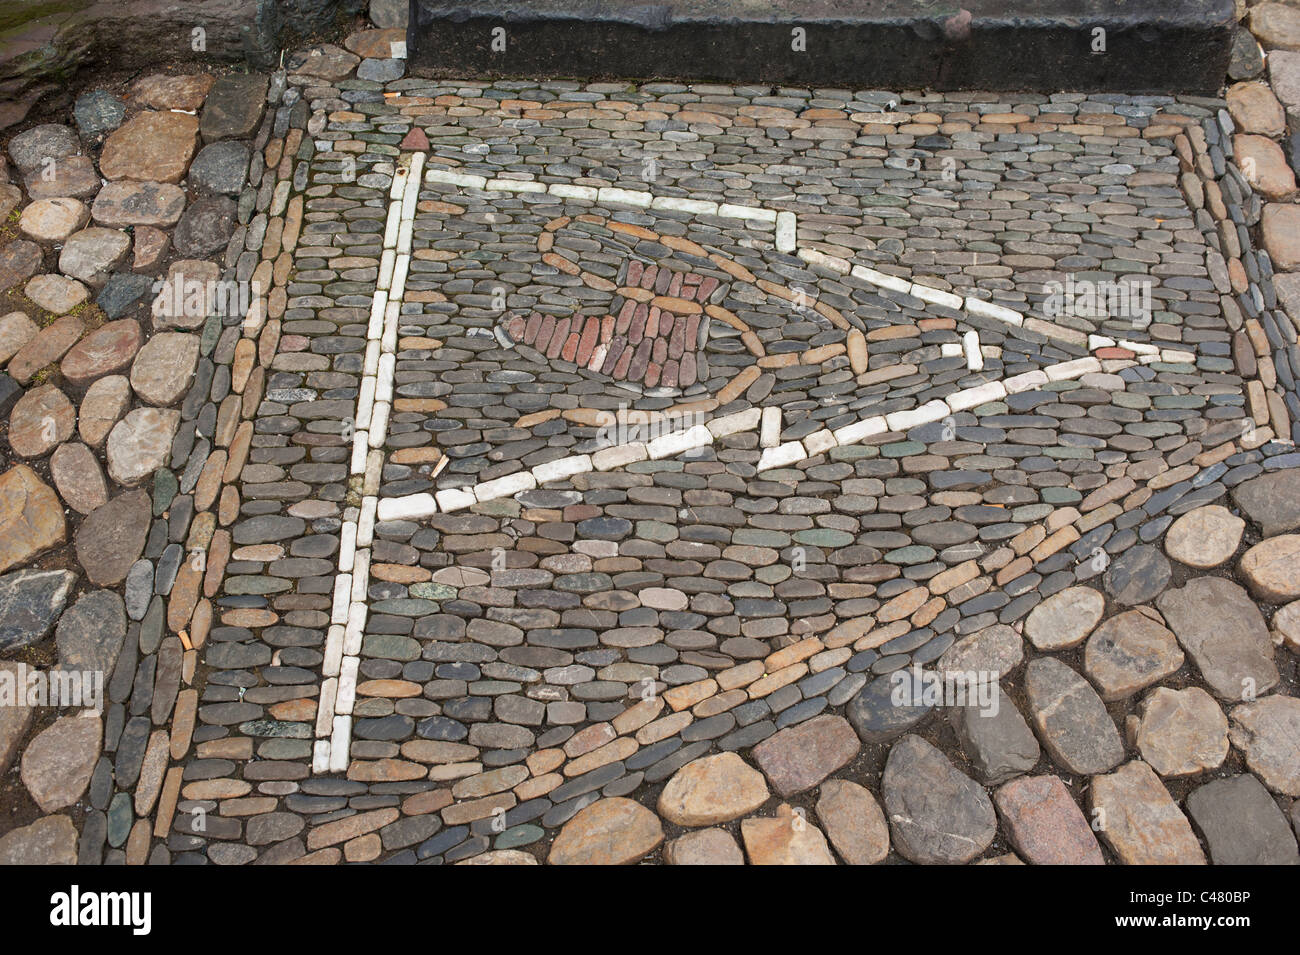 Pflaster-Mosaik, Freiburg, Deutschland Stockfotografie - Alamy